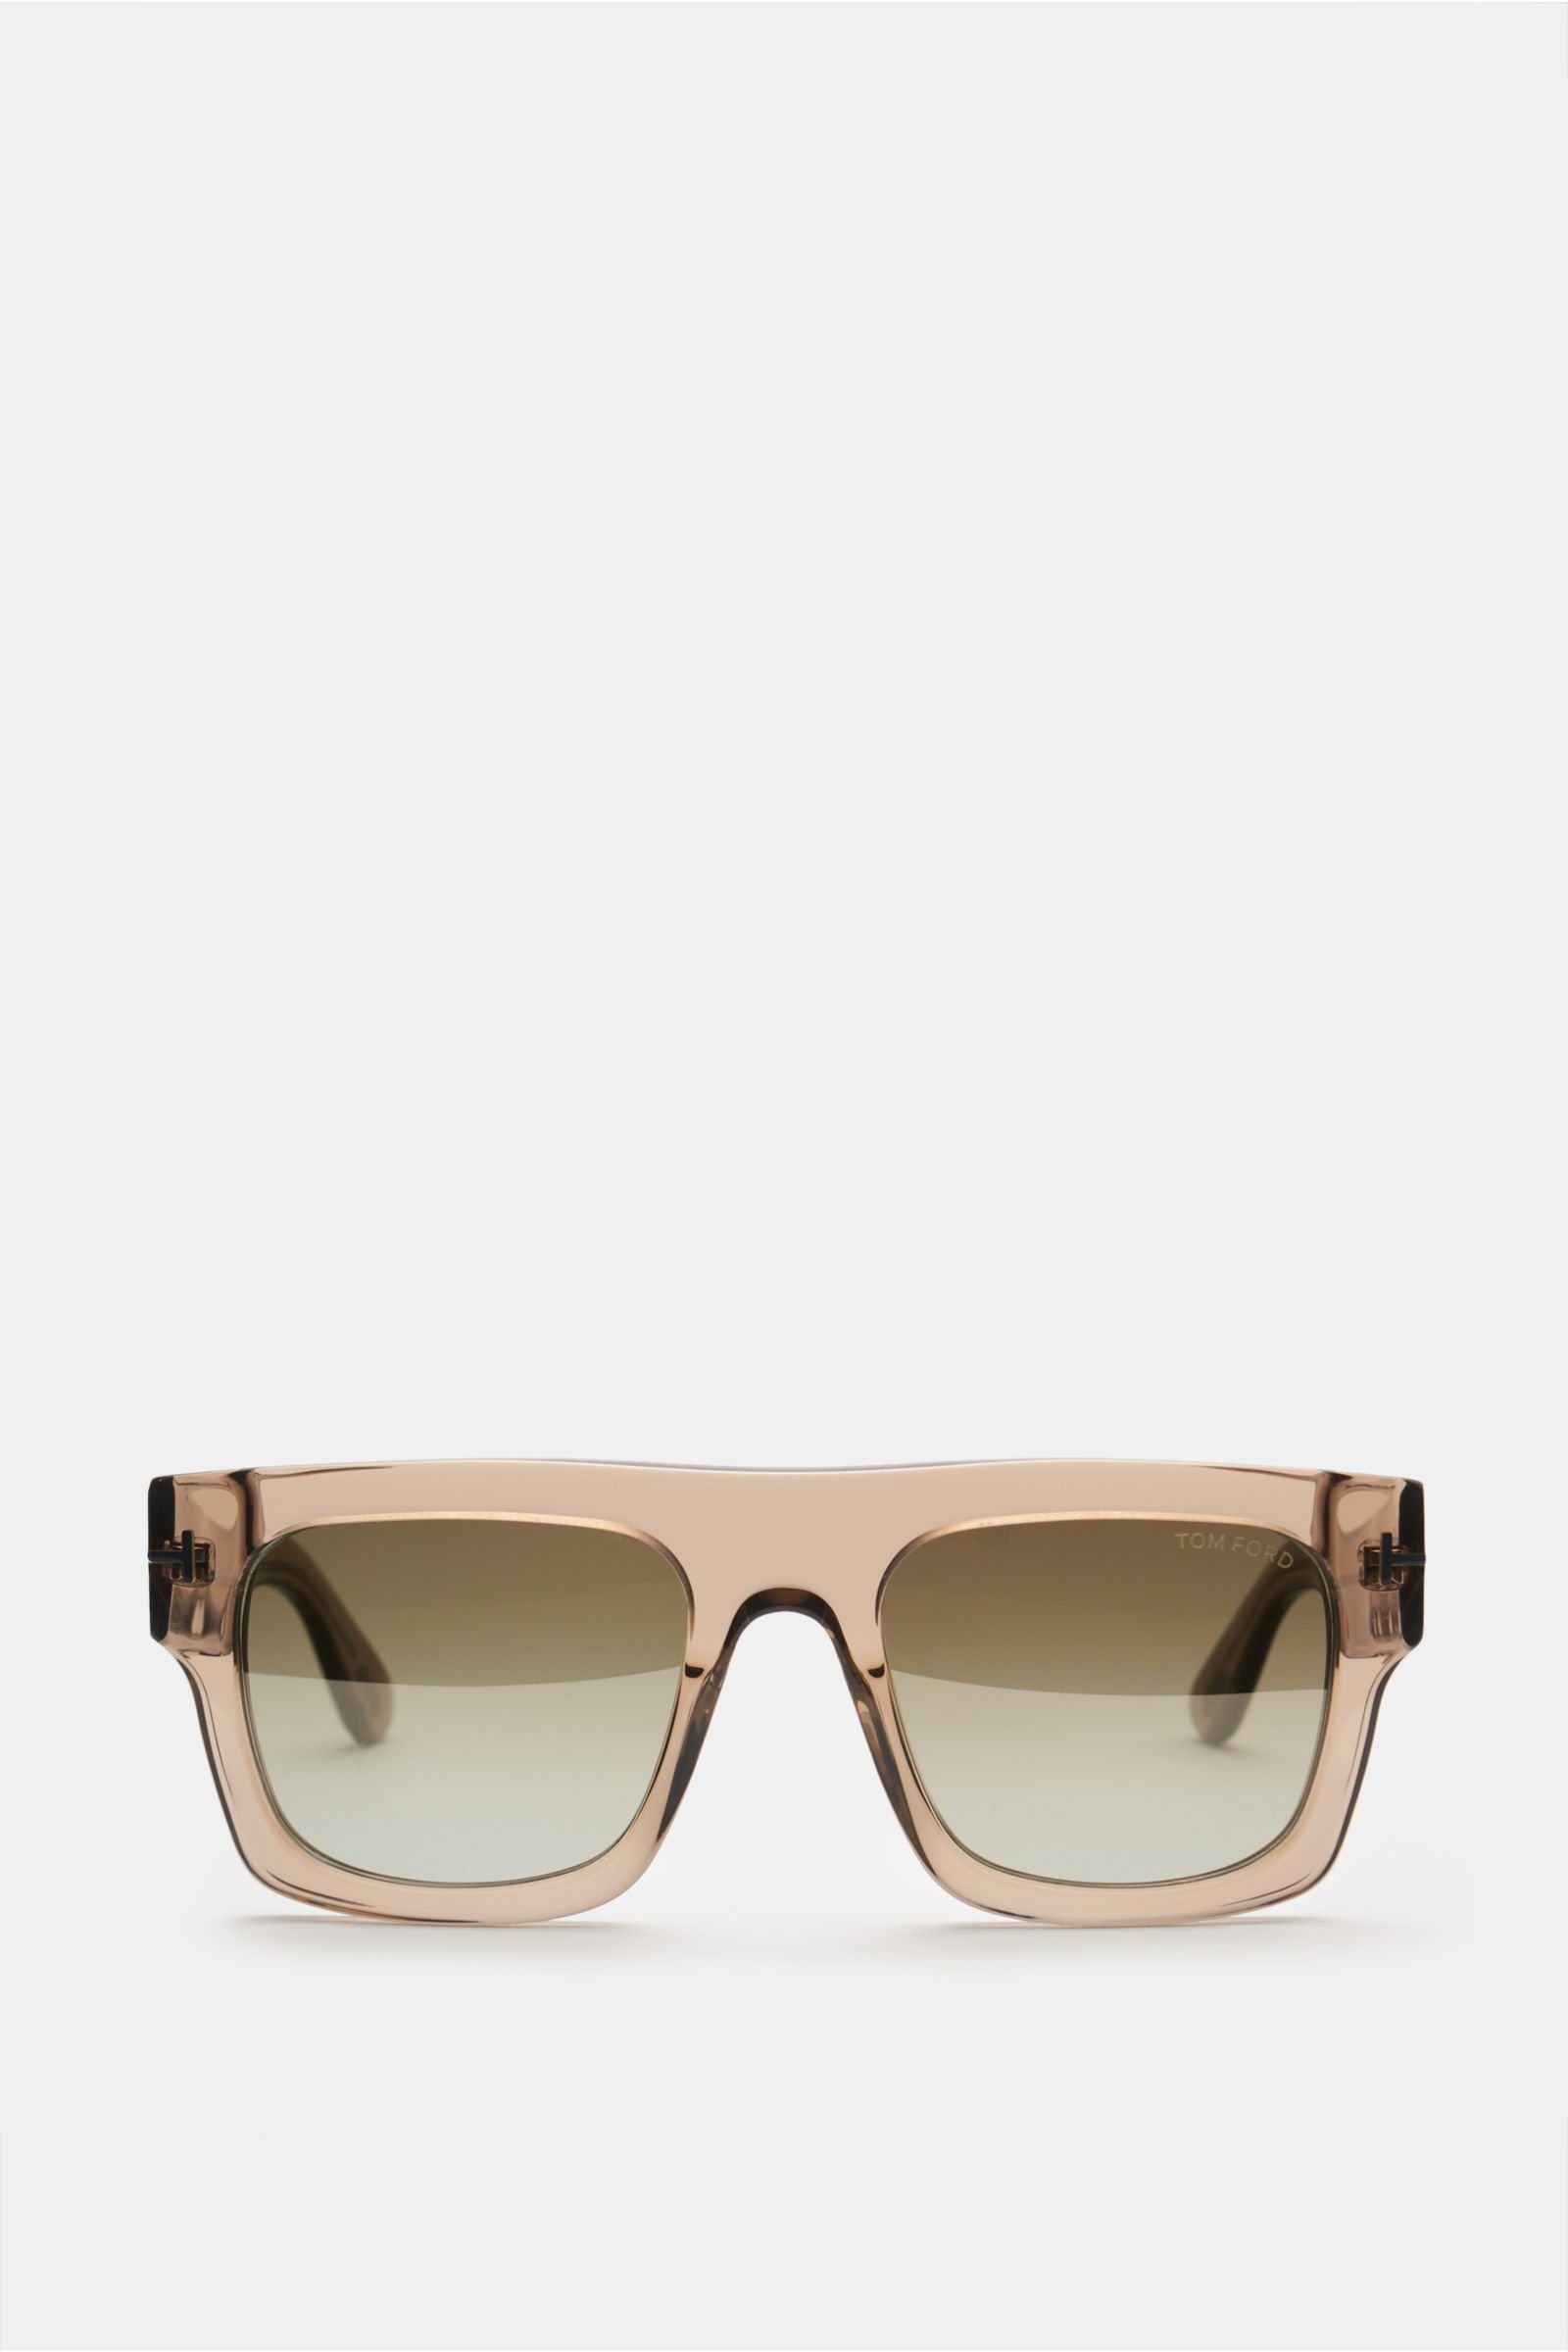 Sunglasses 'Fausto' grey-brown/grey